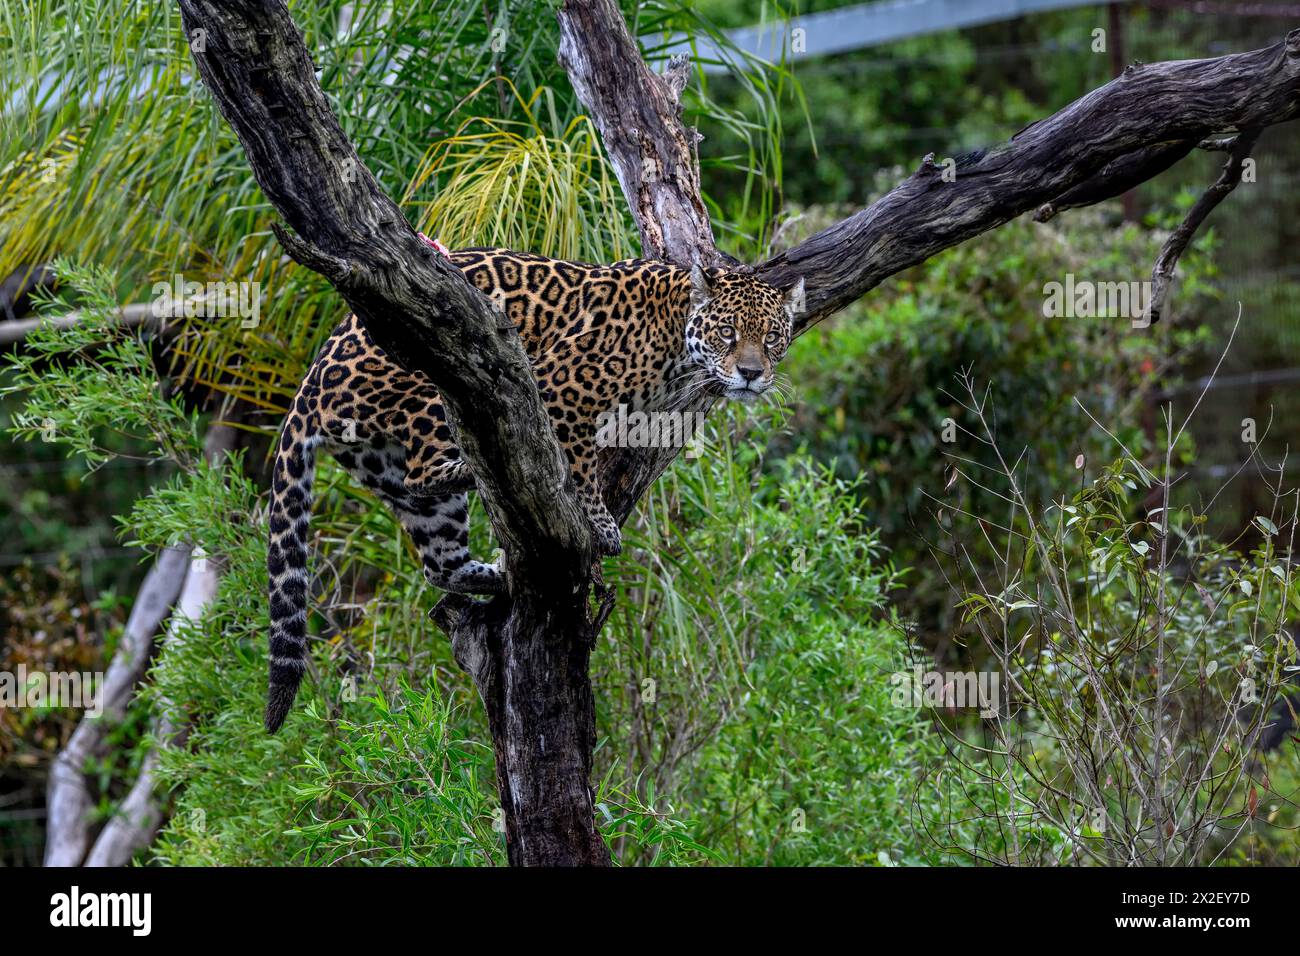 zoology, mammal (mammalia), jaguar or Yaguareté (Panthera onca), ADDITIONAL-RIGHTS-CLEARANCE-INFO-NOT-AVAILABLE Stock Photo